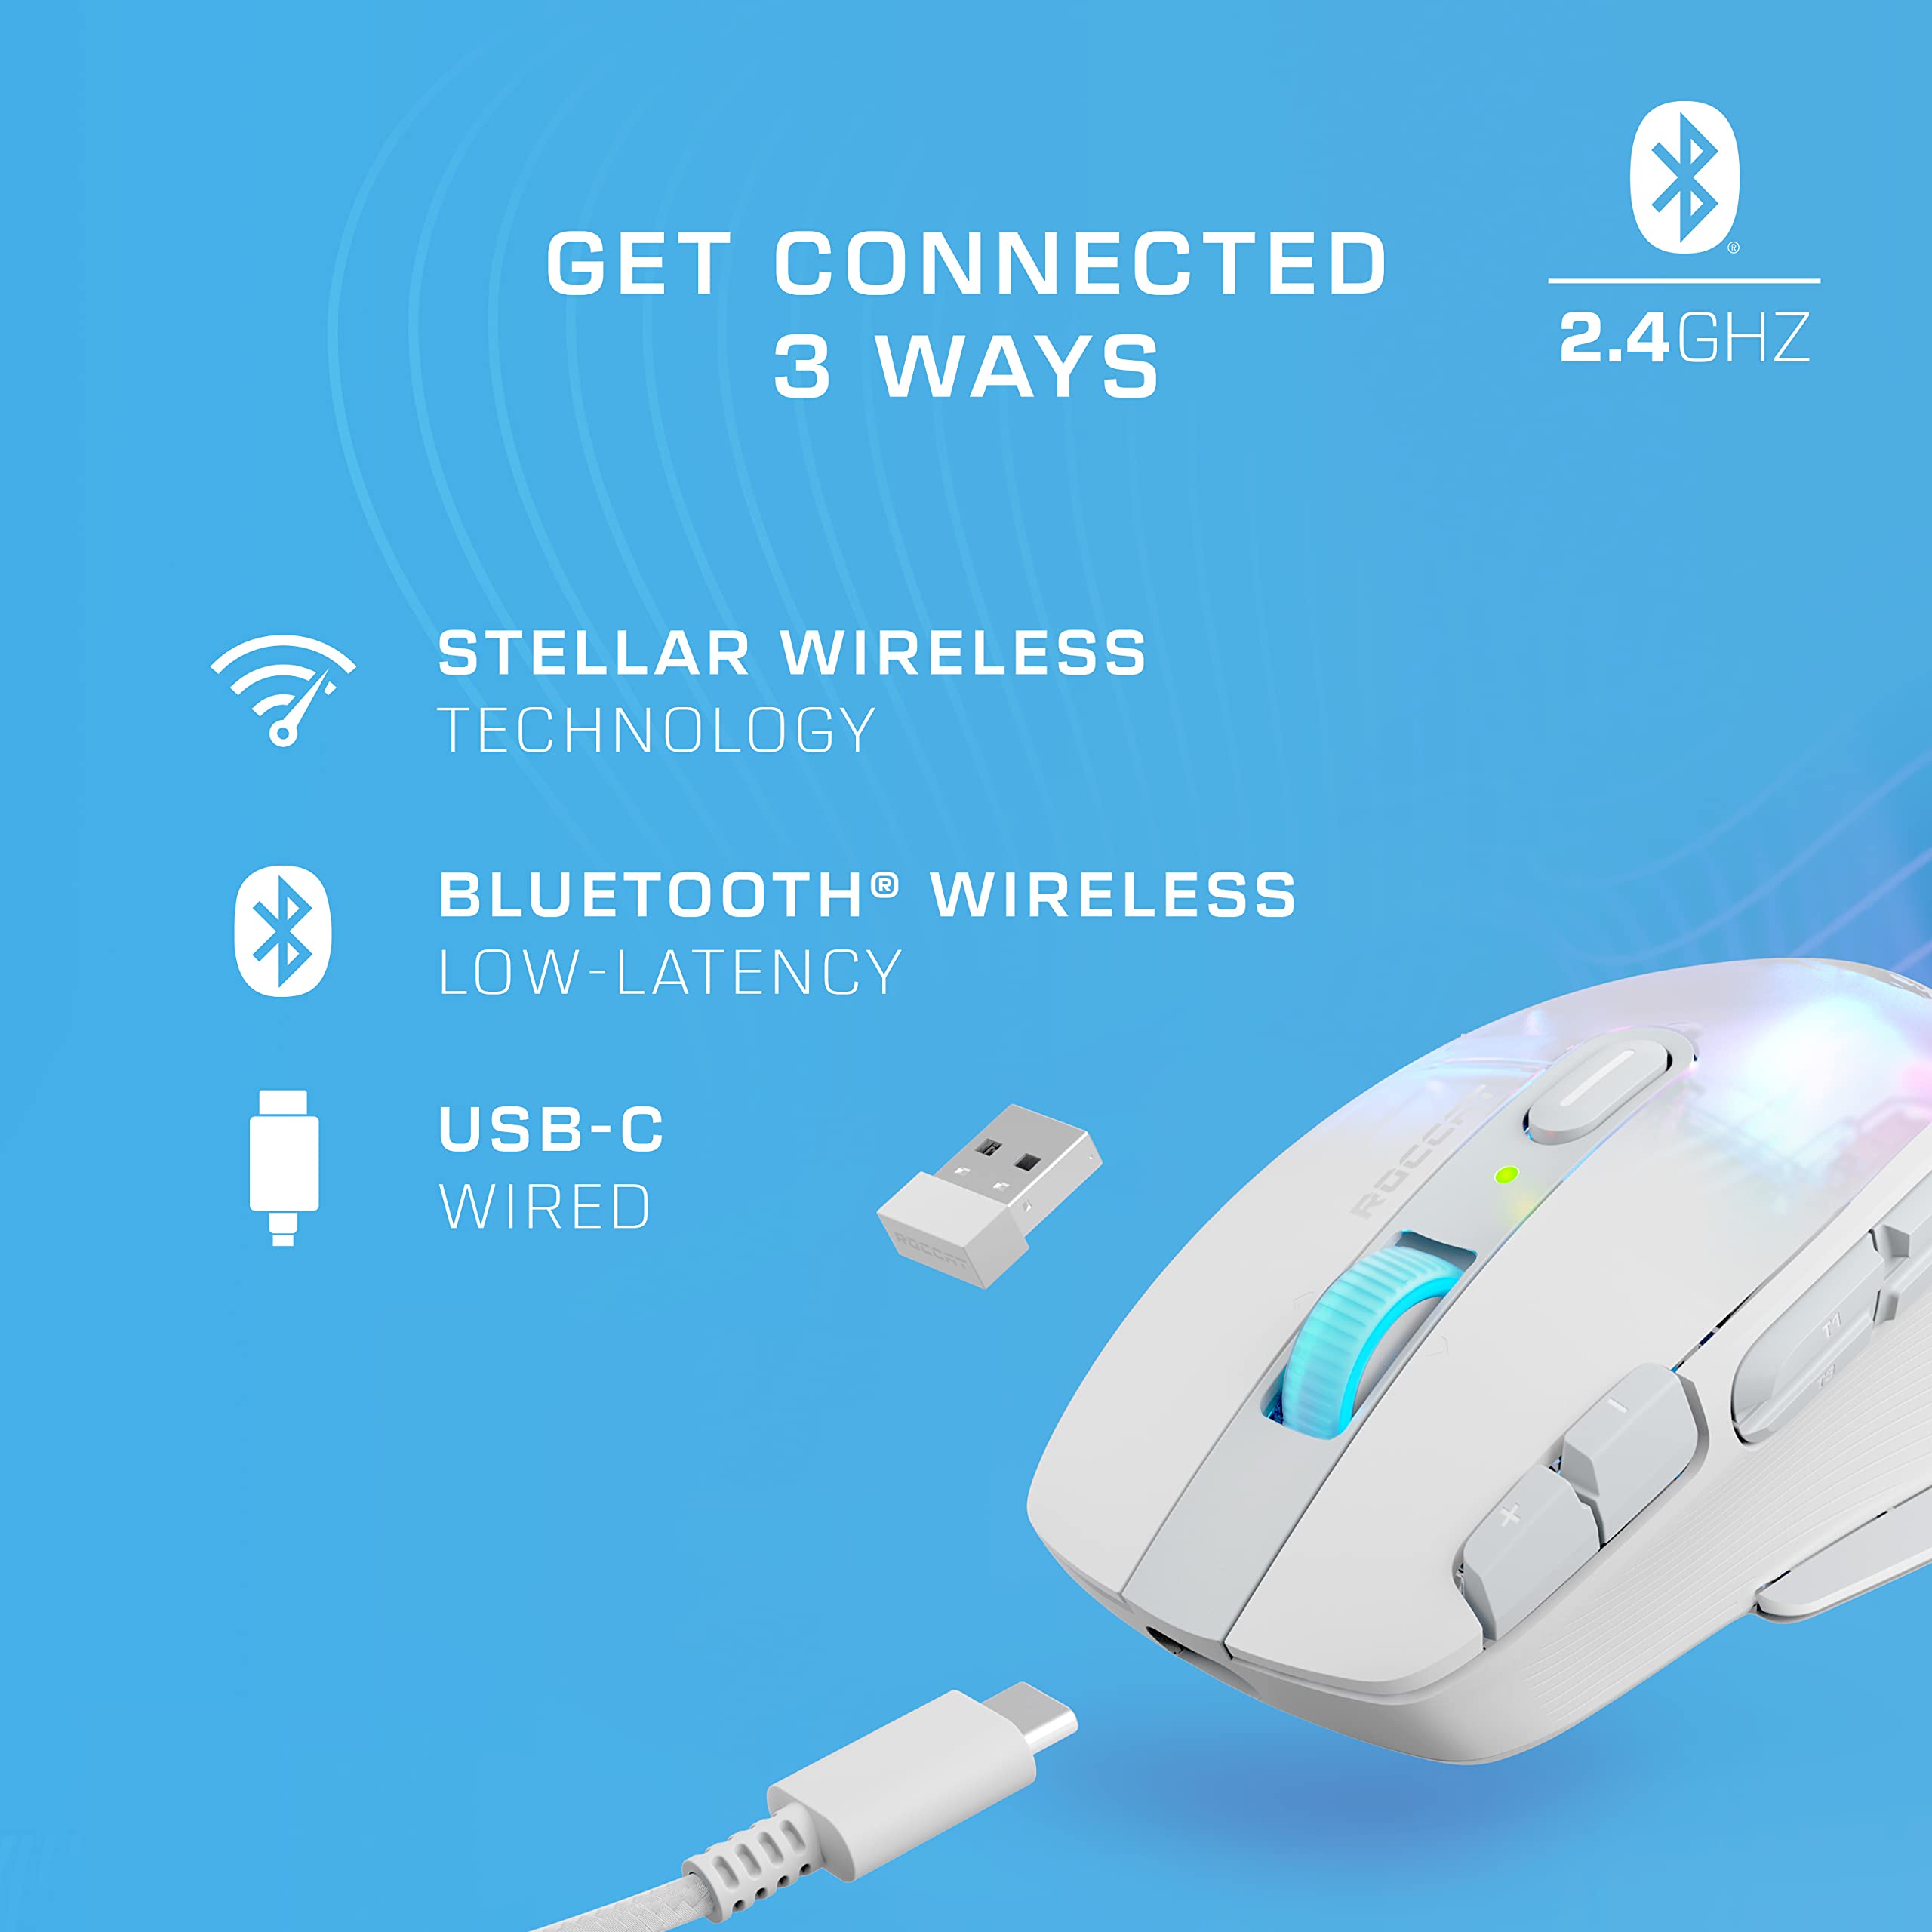 ROCCAT Kone XP Air – Wireless Customizable Ergonomic RGB Gaming Mouse, 19K DPI Optical Sensor, 100-hour Battery & Charging Dock, 29 Programmable Inputs & AIMO RGB Lighting, 4D Wheel – White